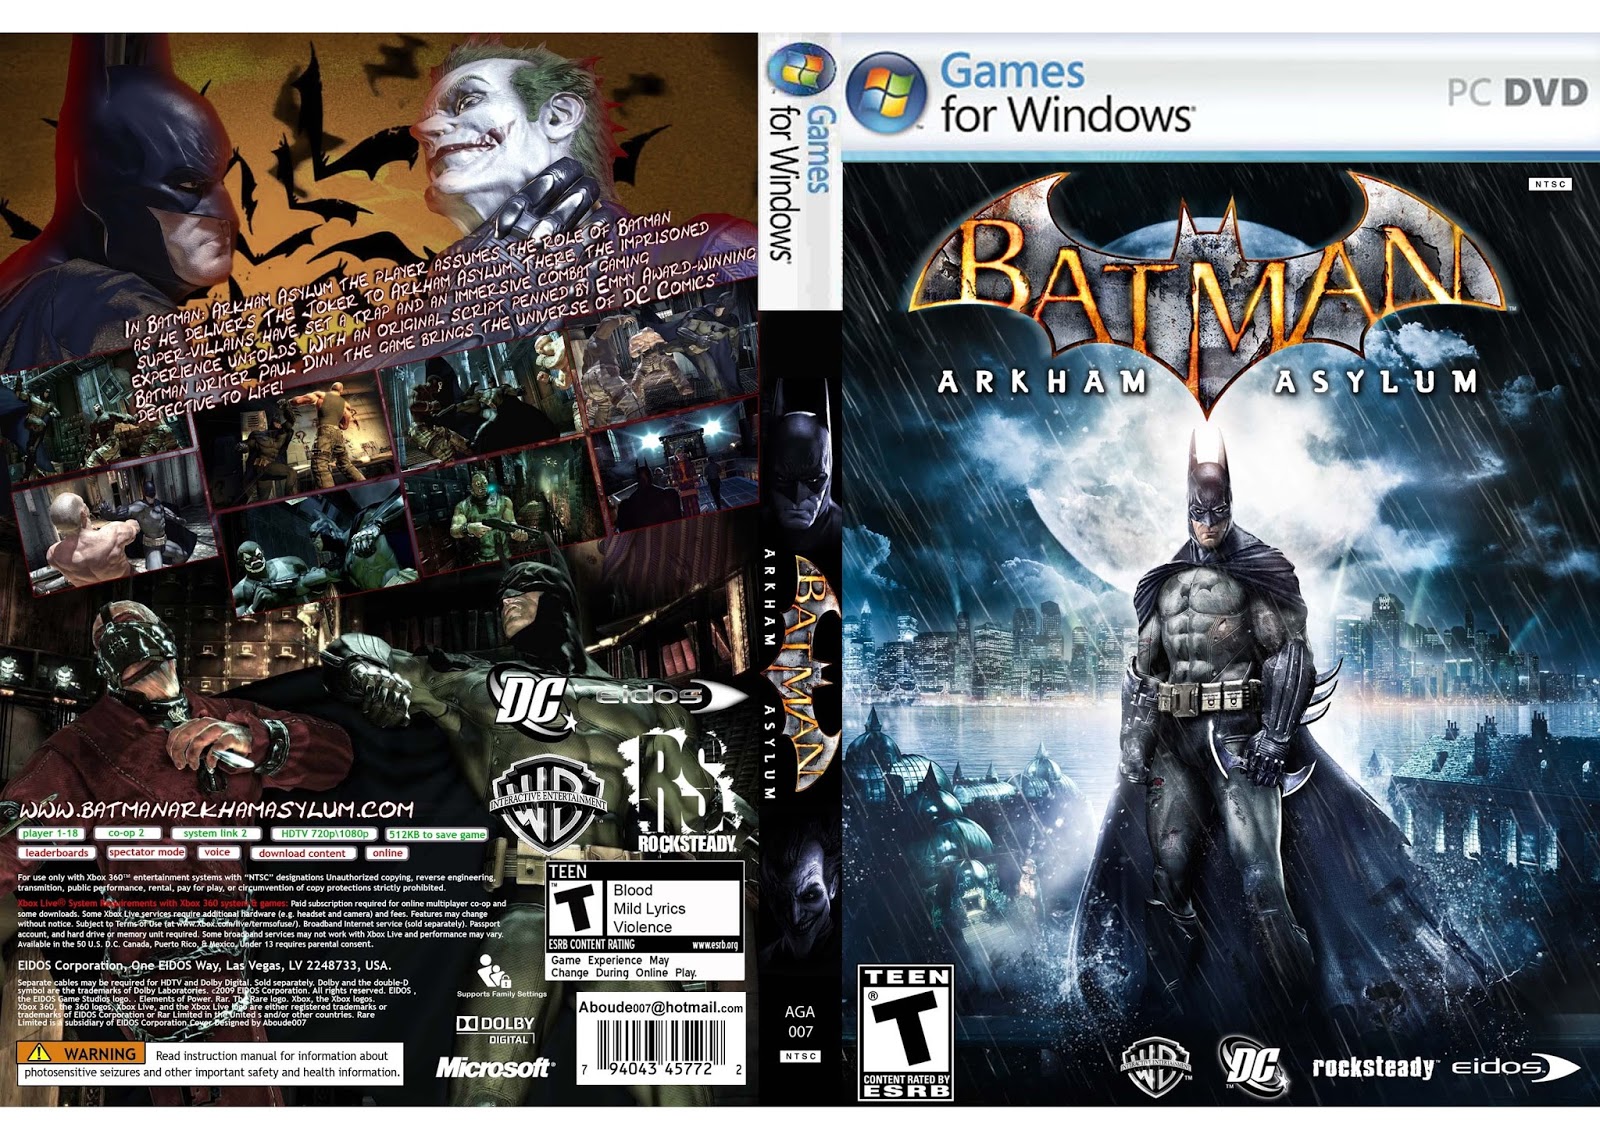 Arkham asylum game of the year edition. Бэтмен Аркхем на Xbox 360. Бэтмен игра на Xbox 360. Batman Arkham Asylum Xbox 360. Batman Arkham Asylum обложка Xbox 360.